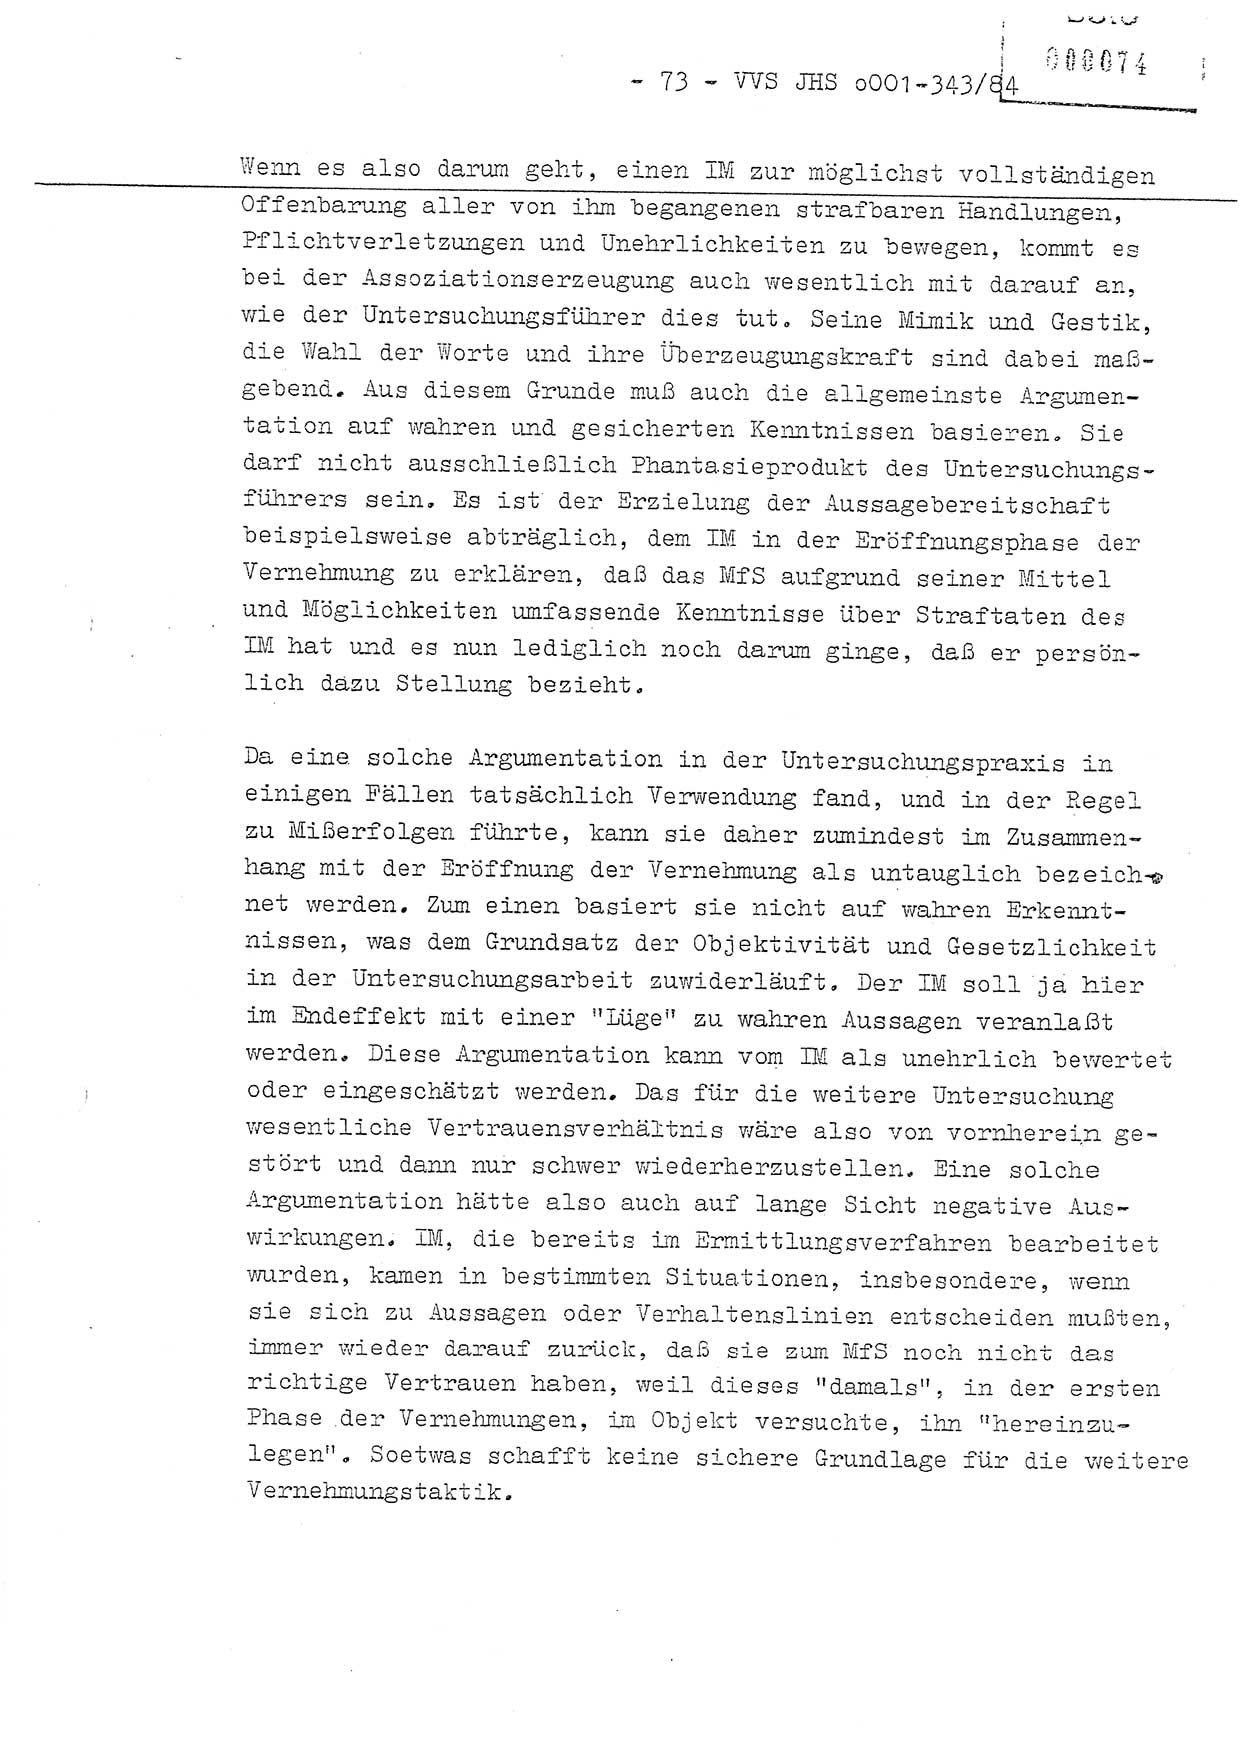 Diplomarbeit, Oberleutnant Bernd Michael (HA Ⅸ/5), Oberleutnant Peter Felber (HA IX/5), Ministerium für Staatssicherheit (MfS) [Deutsche Demokratische Republik (DDR)], Juristische Hochschule (JHS), Vertrauliche Verschlußsache (VVS) o001-343/84, Potsdam 1985, Seite 73 (Dipl.-Arb. MfS DDR JHS VVS o001-343/84 1985, S. 73)